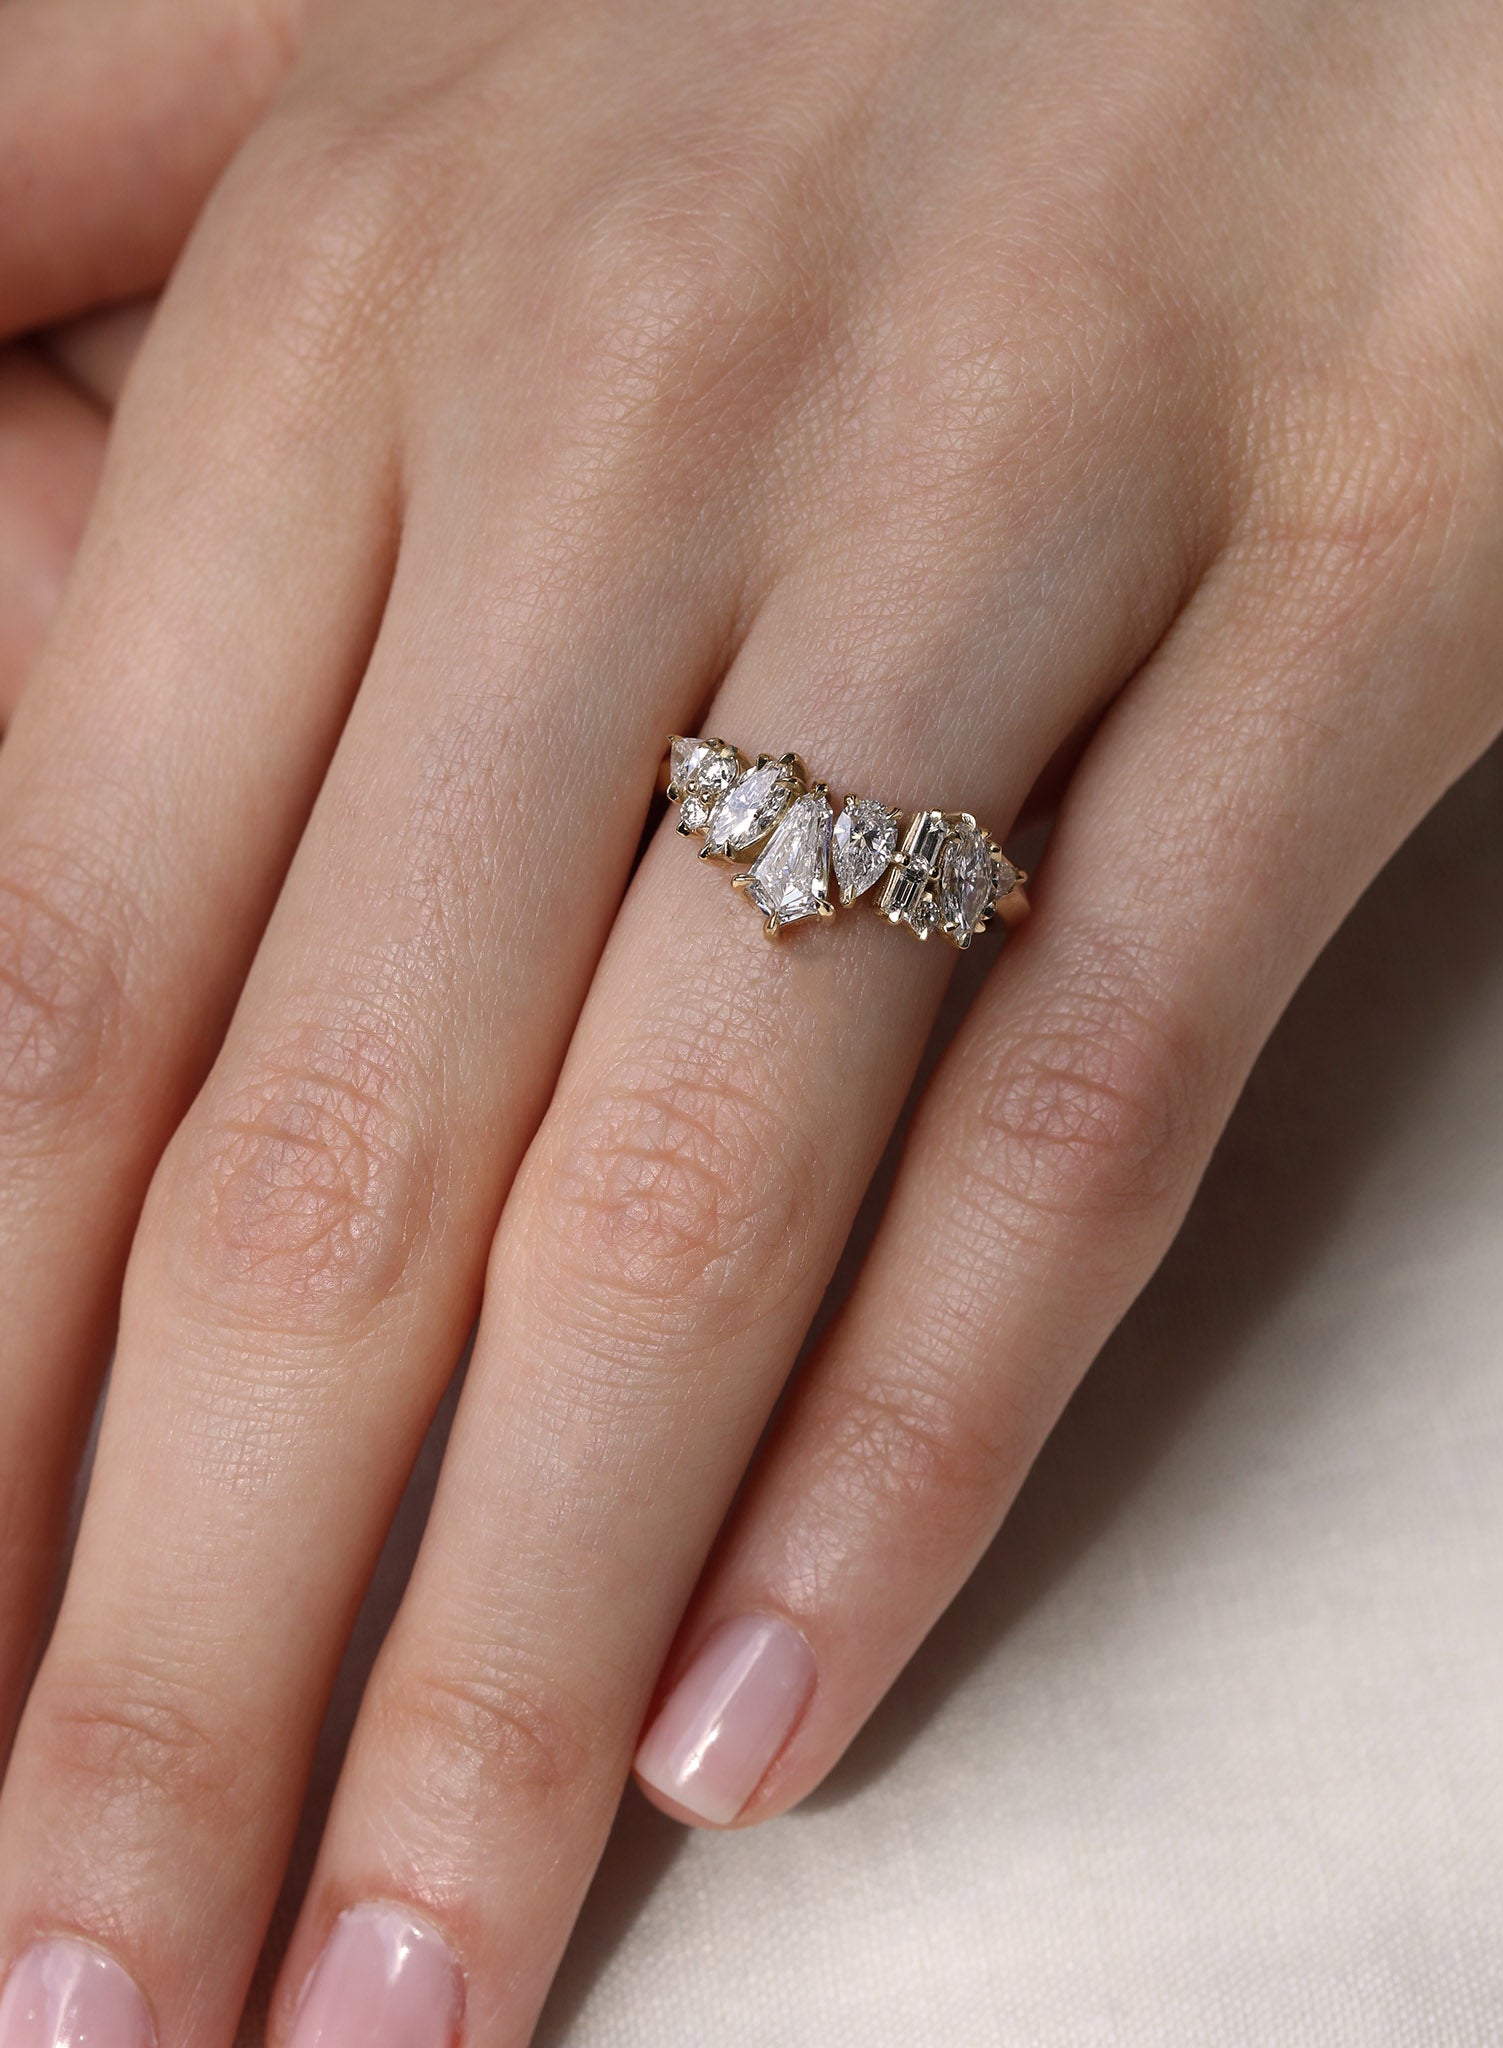 Bespoke diamond wedding ring featuring a playful yet refined assortment of diamond cuts.